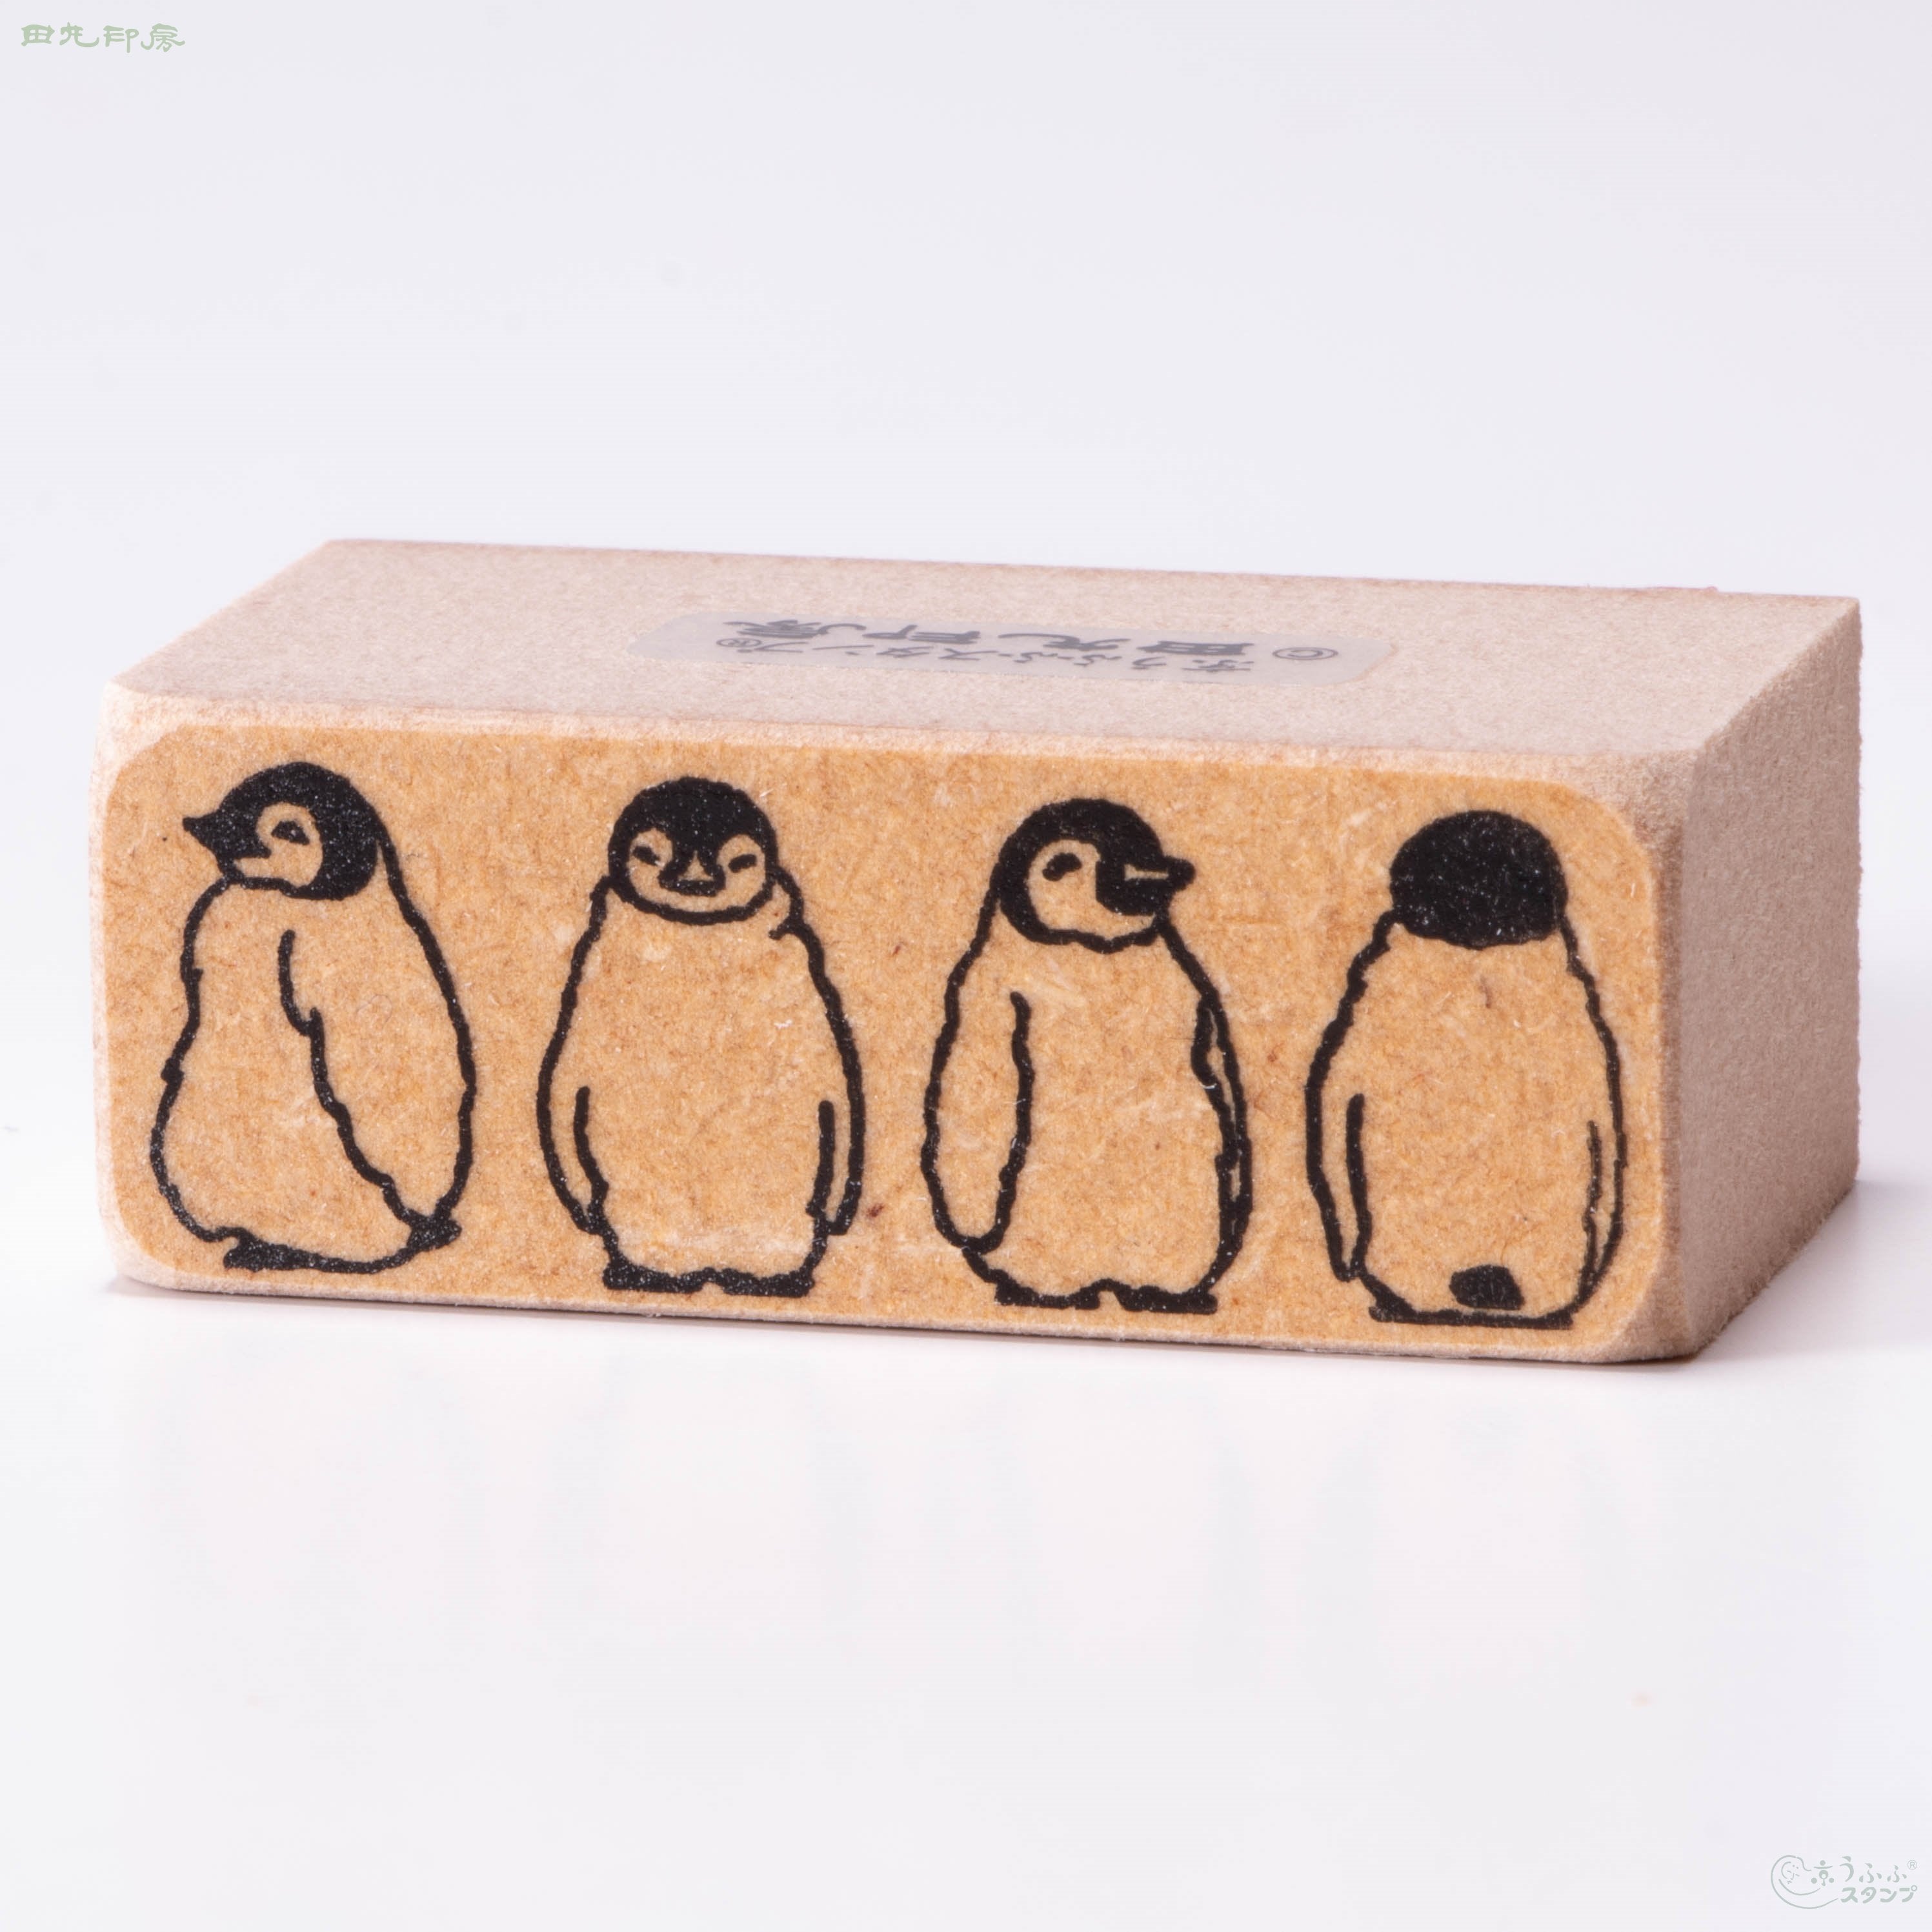 4 penguin.